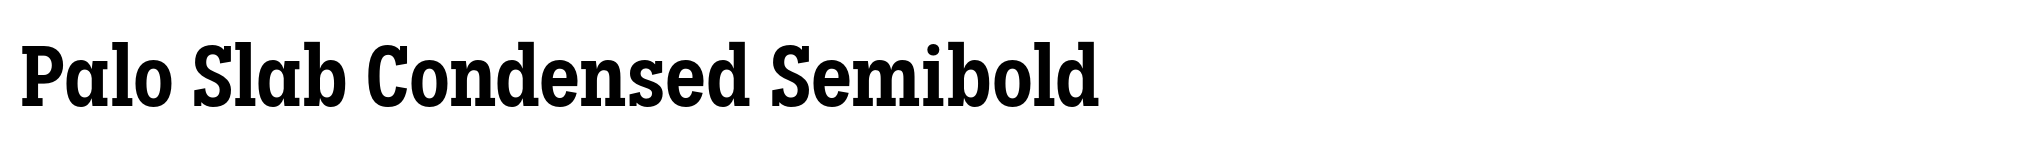 Palo Slab Condensed Semibold image